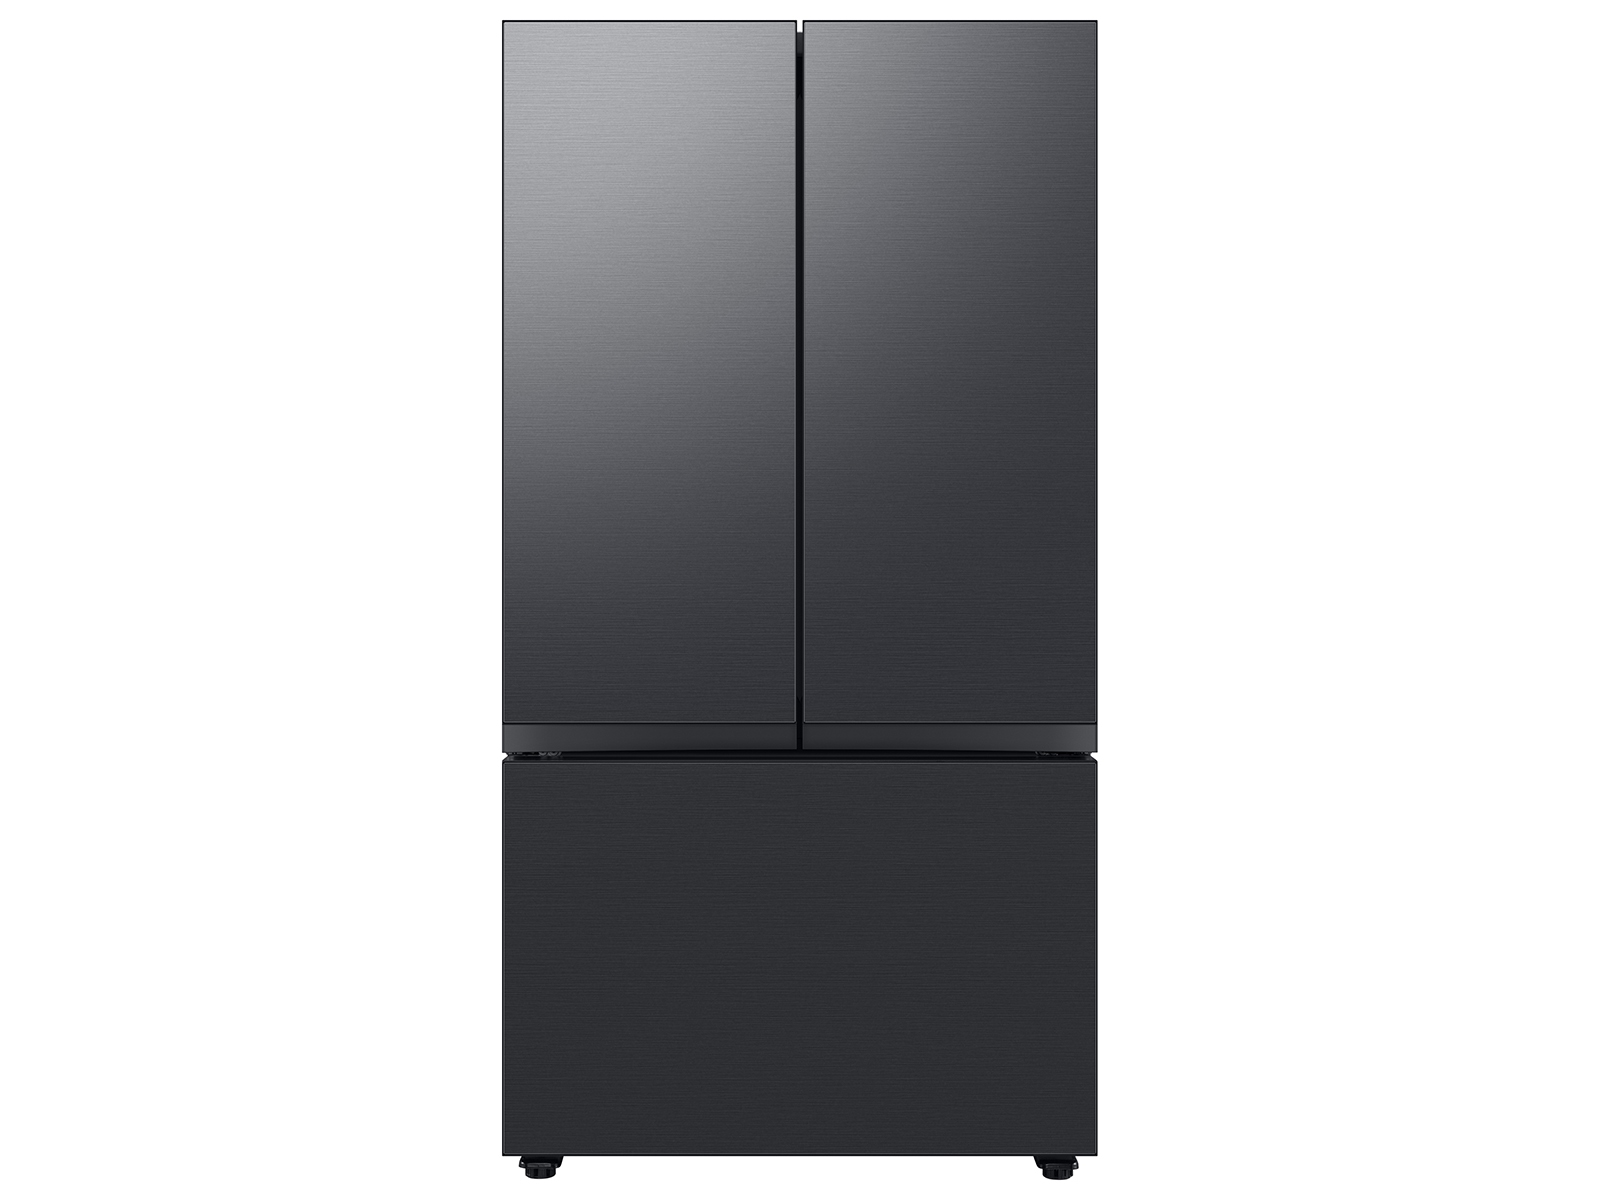 Samsung Bespoke 3-Door French Door Refrigerator (24 cu. ft.) with AutoFill Water Pitcher in Matte in Black Steel(BNDL-1650463543638)